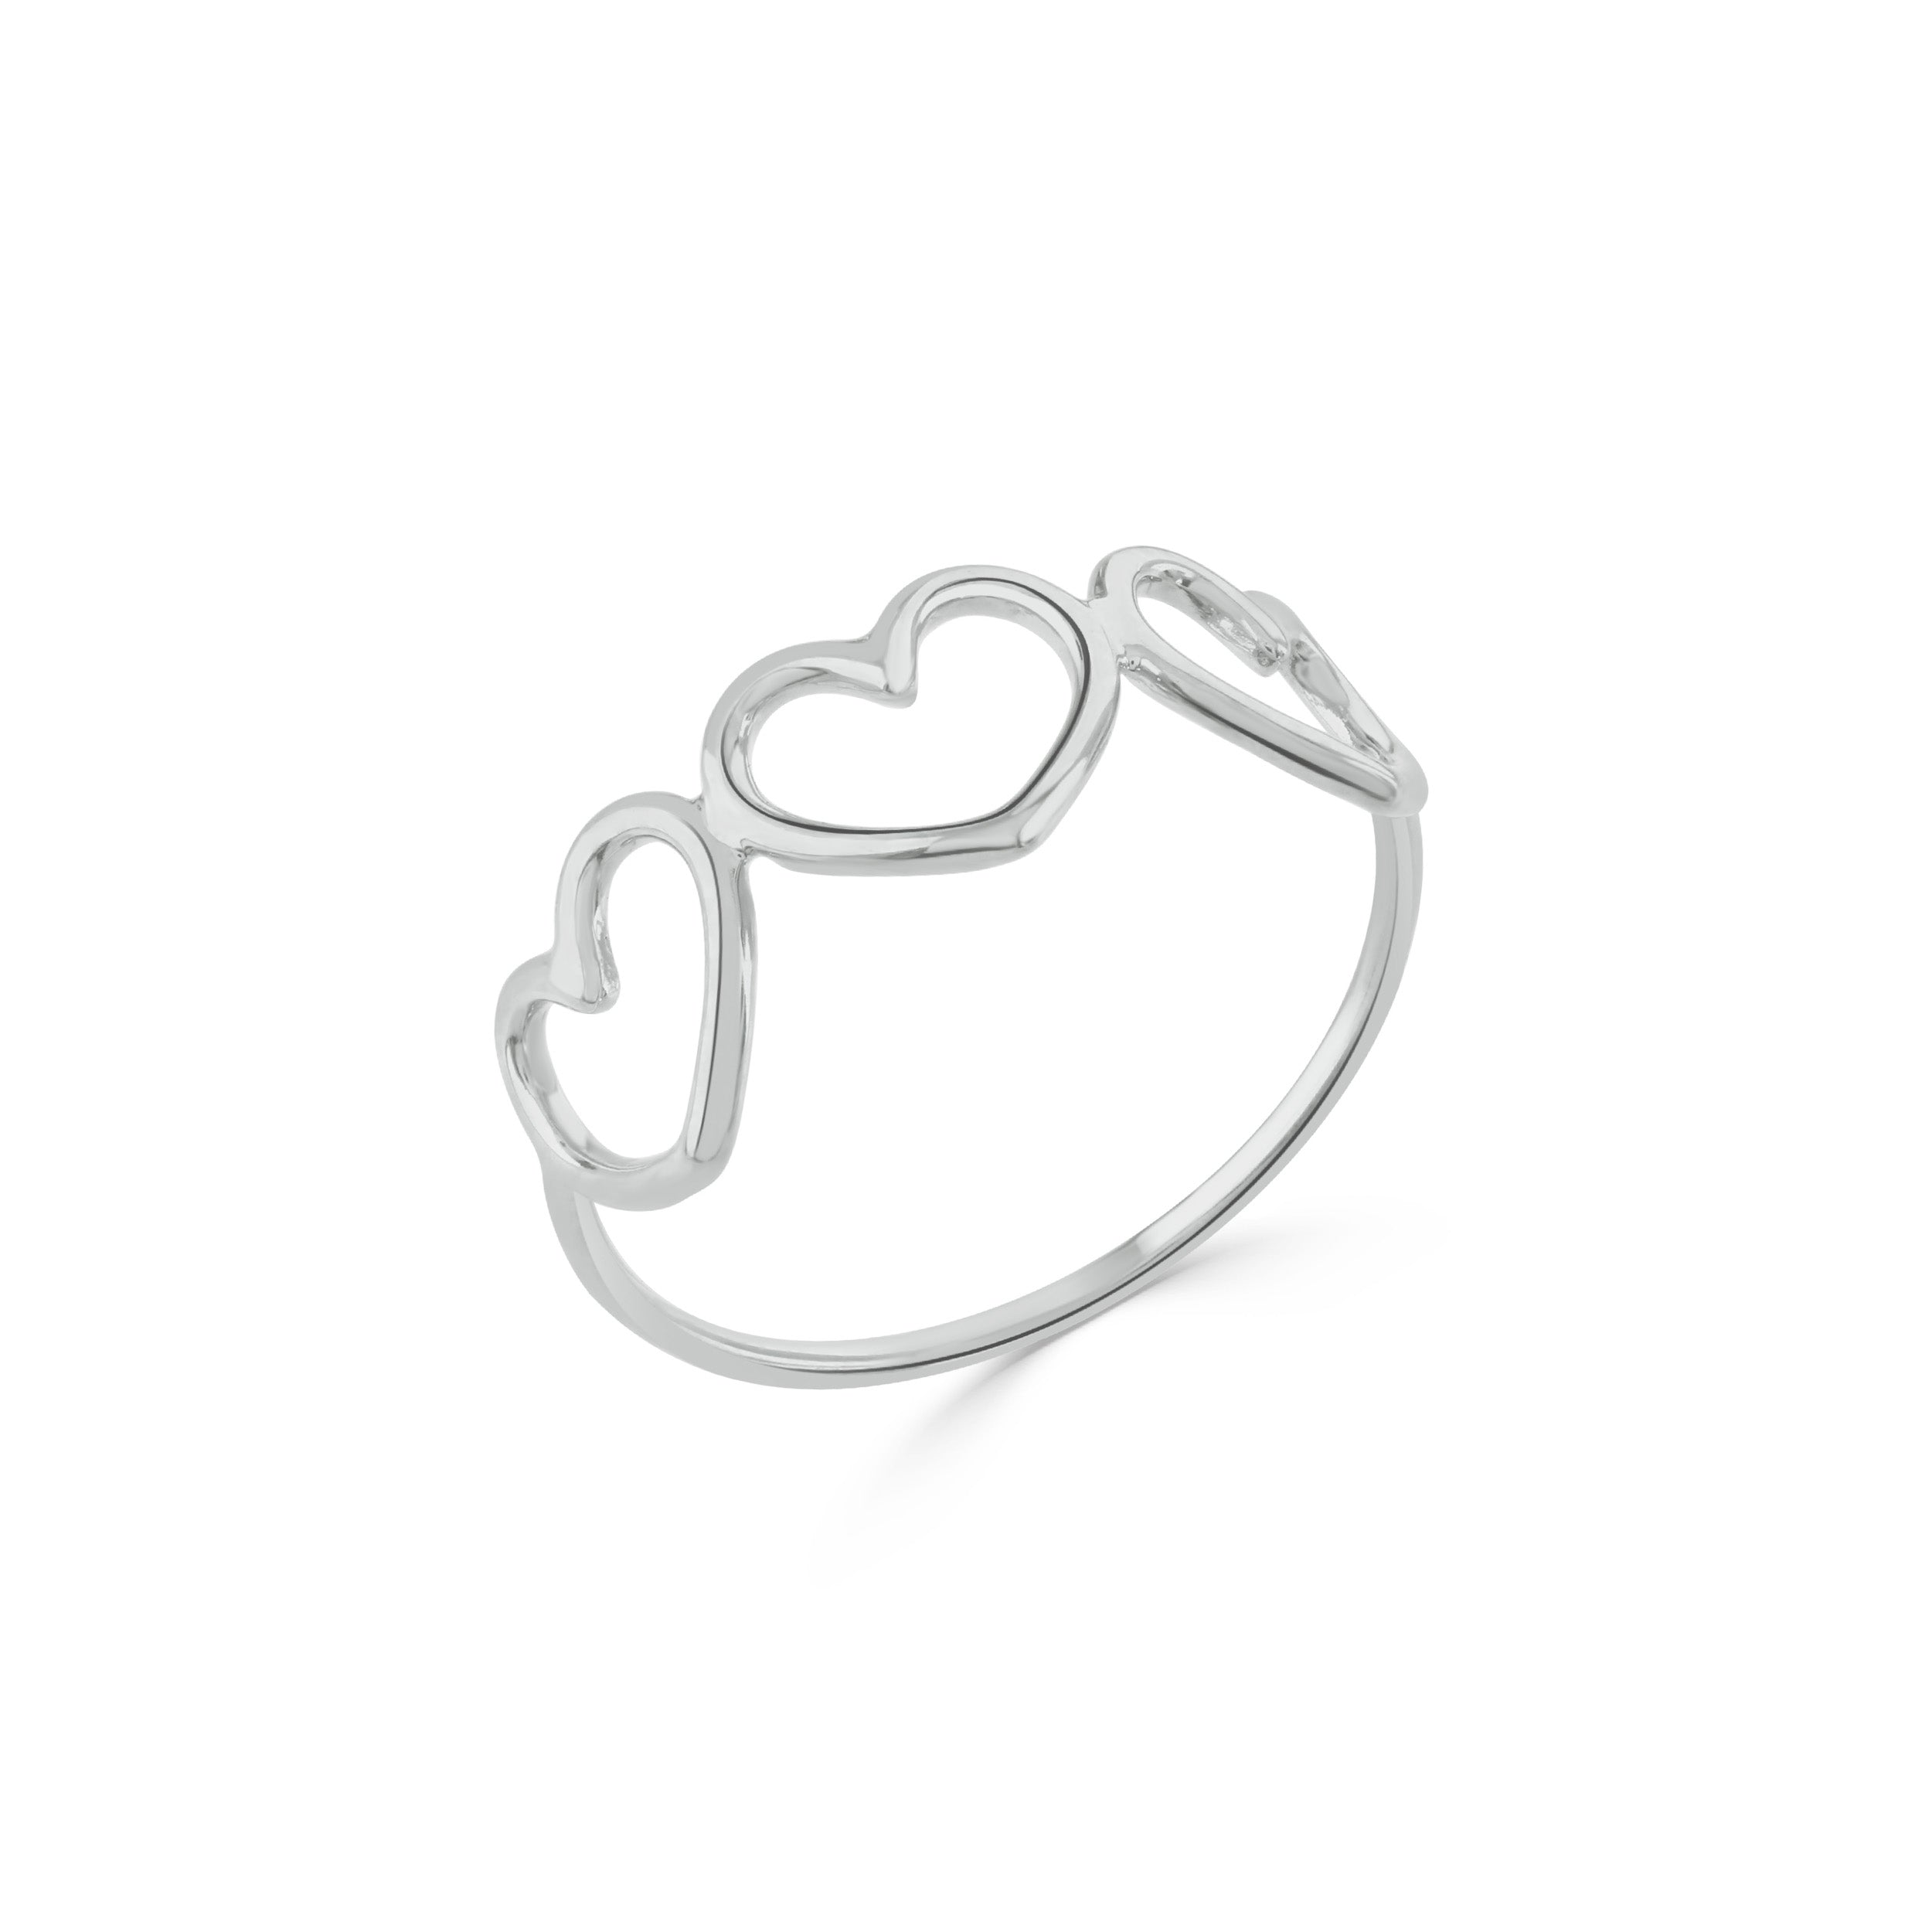 Silver Three Heart Ring